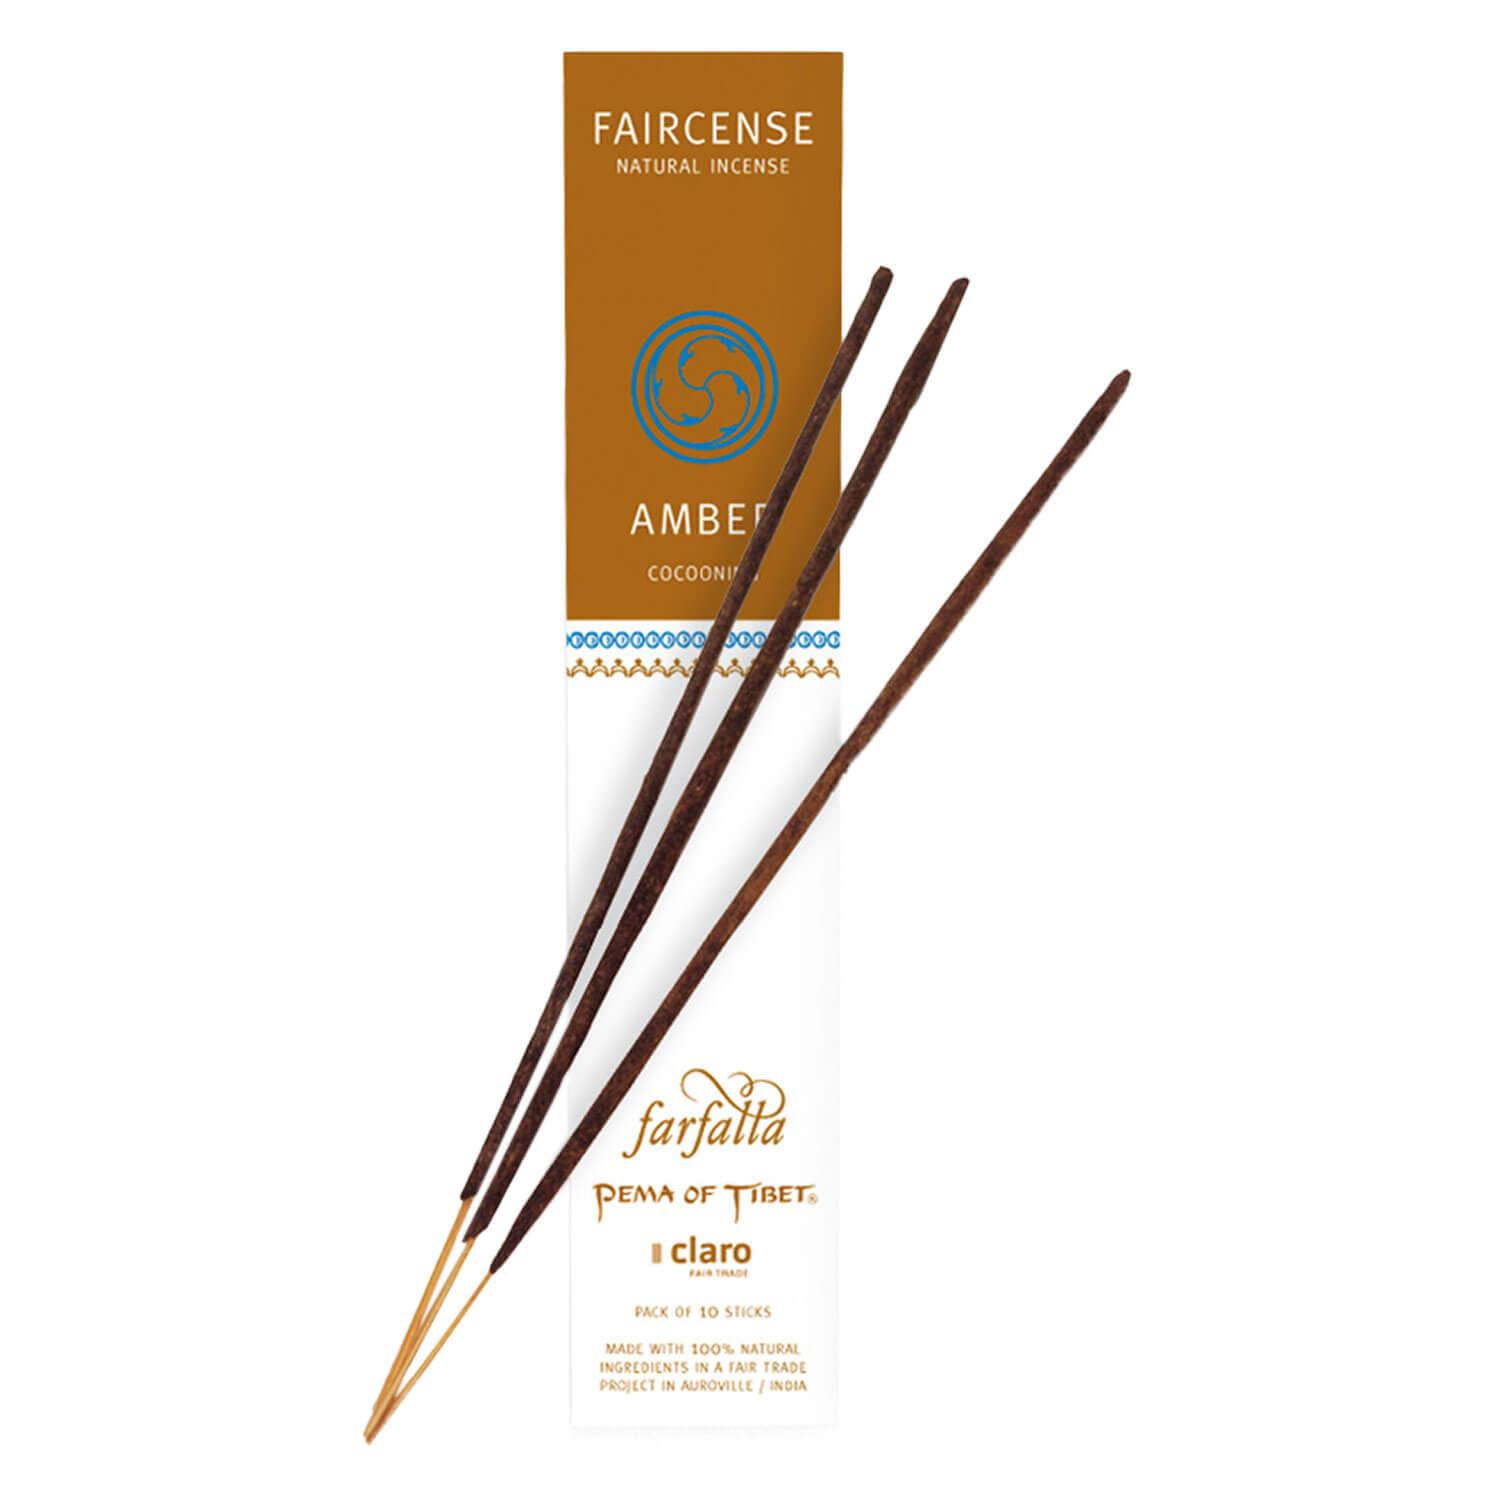 Farfalla Räucherstäbchen - Amber/Cocooning Faircense Incense Sticks